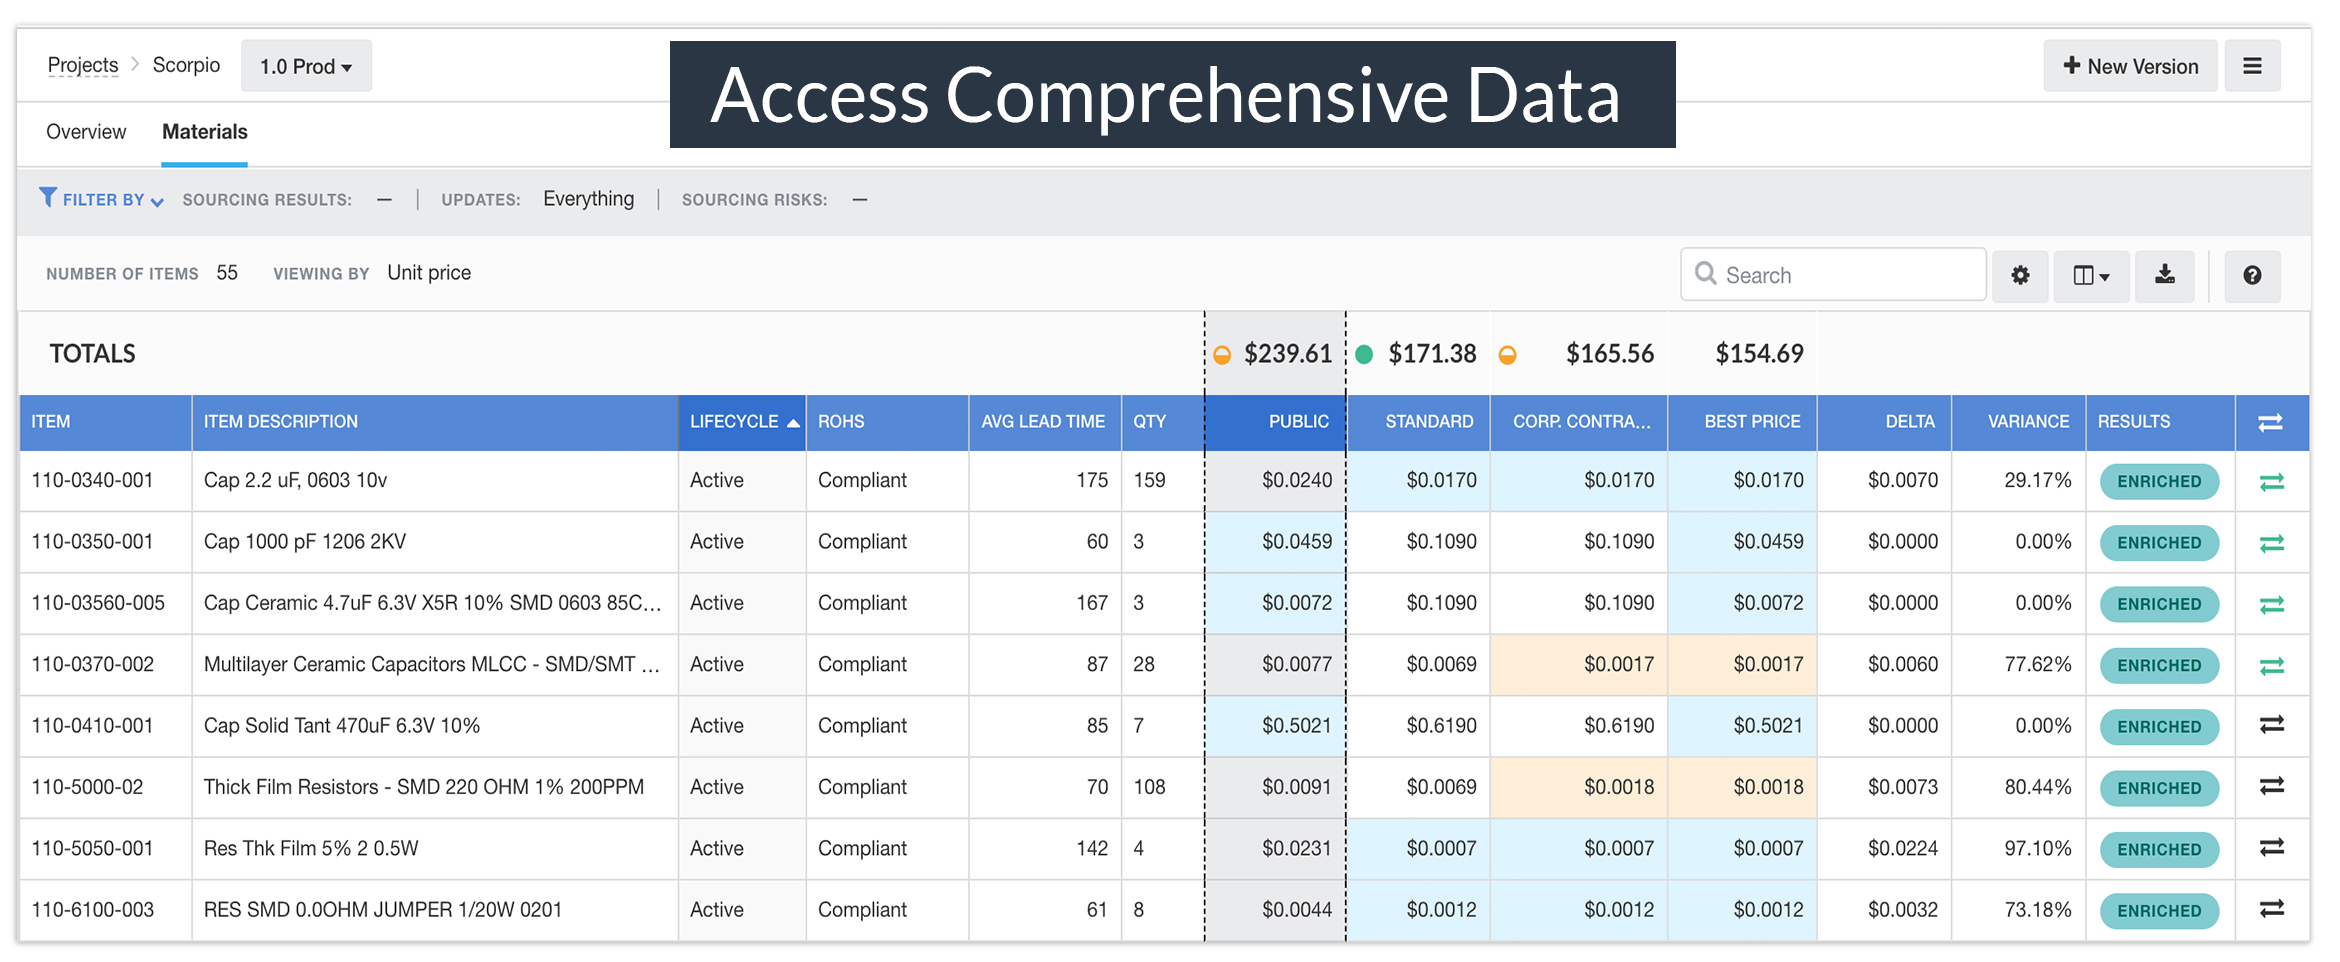 Access Comprehensive Data